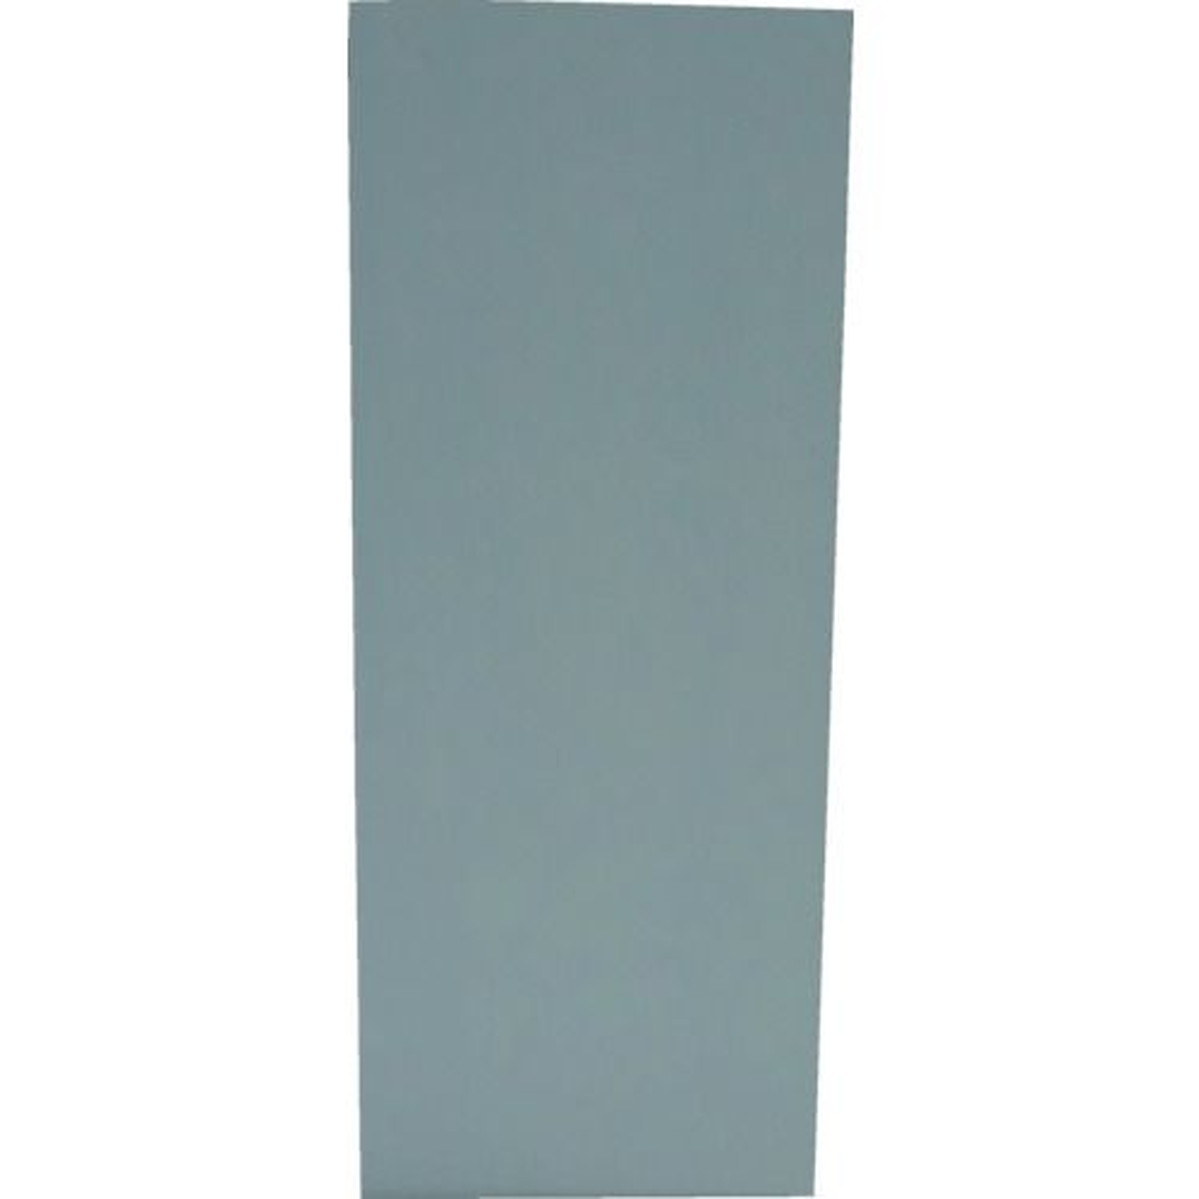 IRIS 554206 カラー化粧棚板 LBC−945 ホワイト 1枚 (LBC-945-WH)